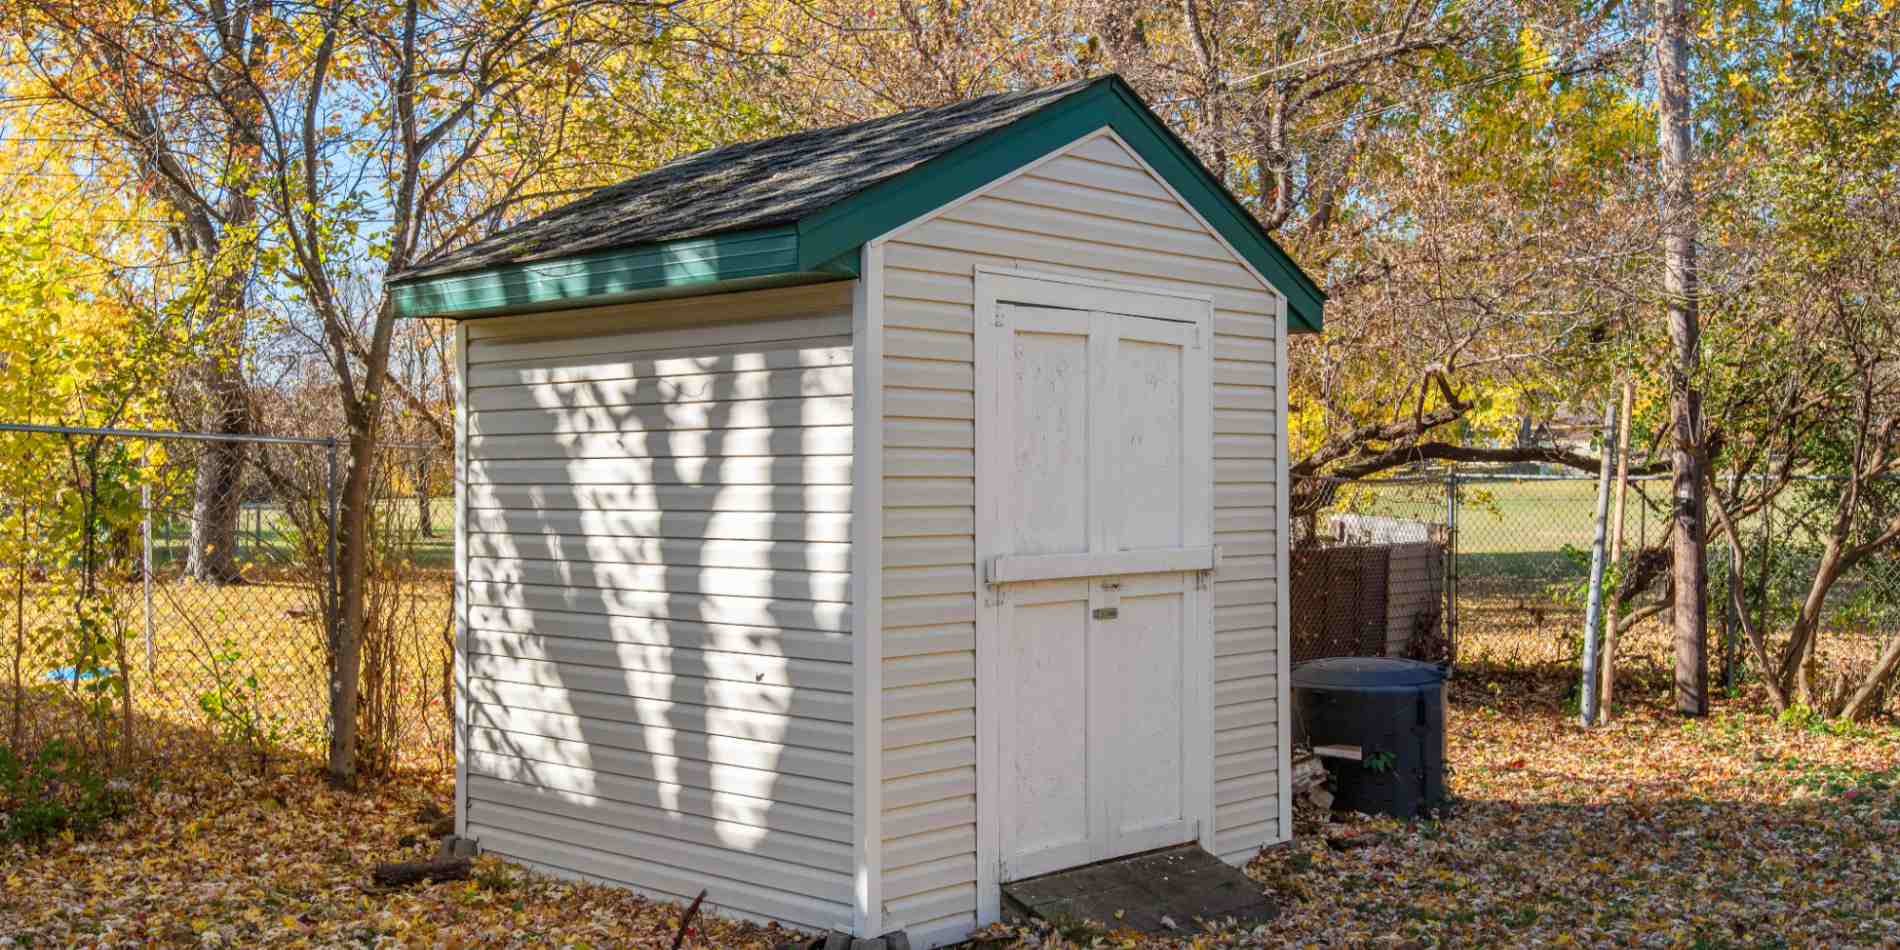 A backyard shed